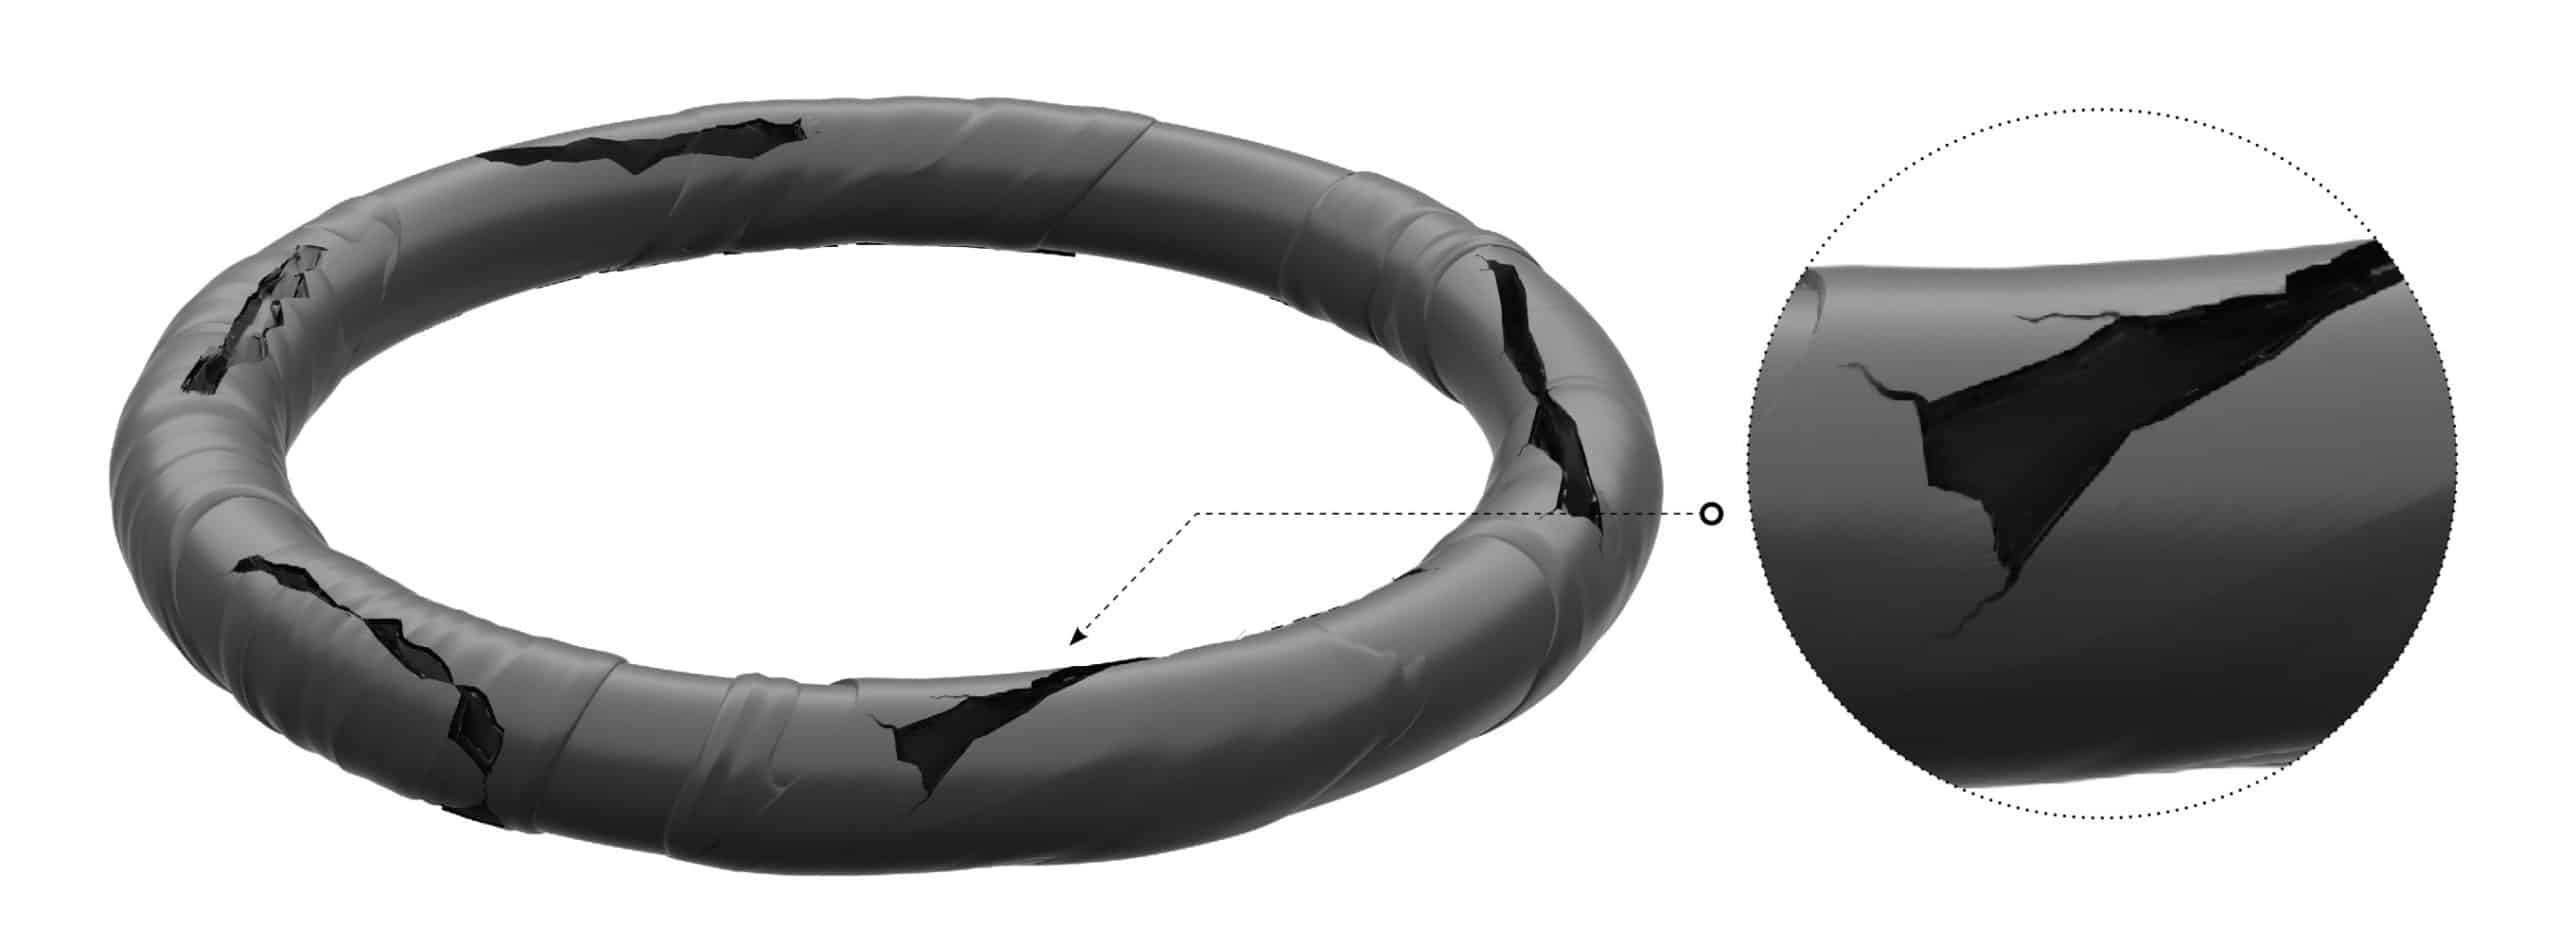 Viton® O-Rings: Extreme Durability | Global O-Ring and Seal